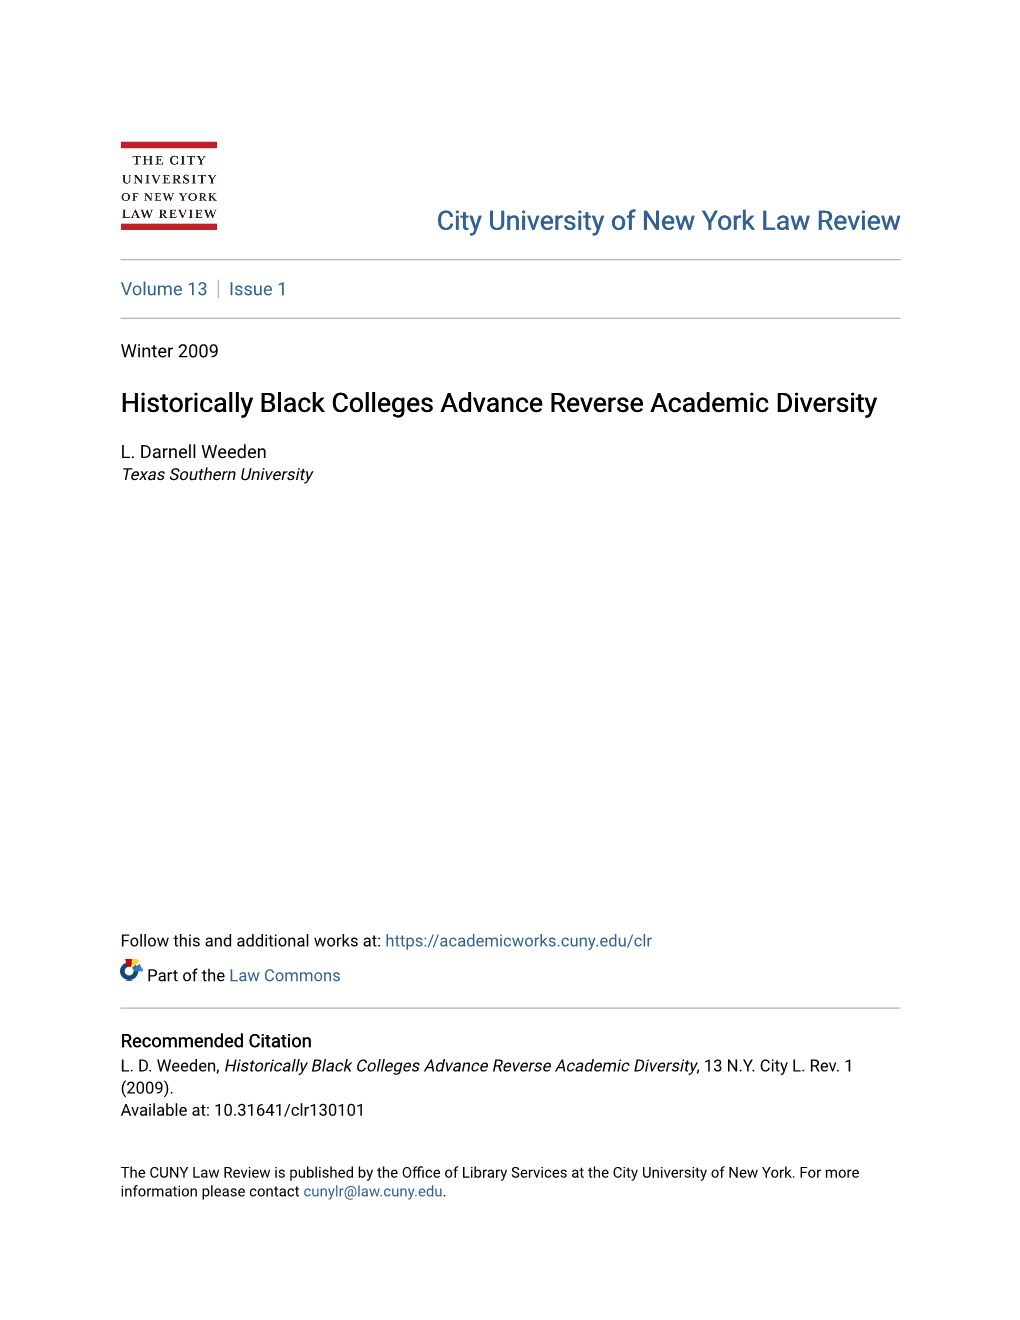 Historically Black Colleges Advance Reverse Academic Diversity